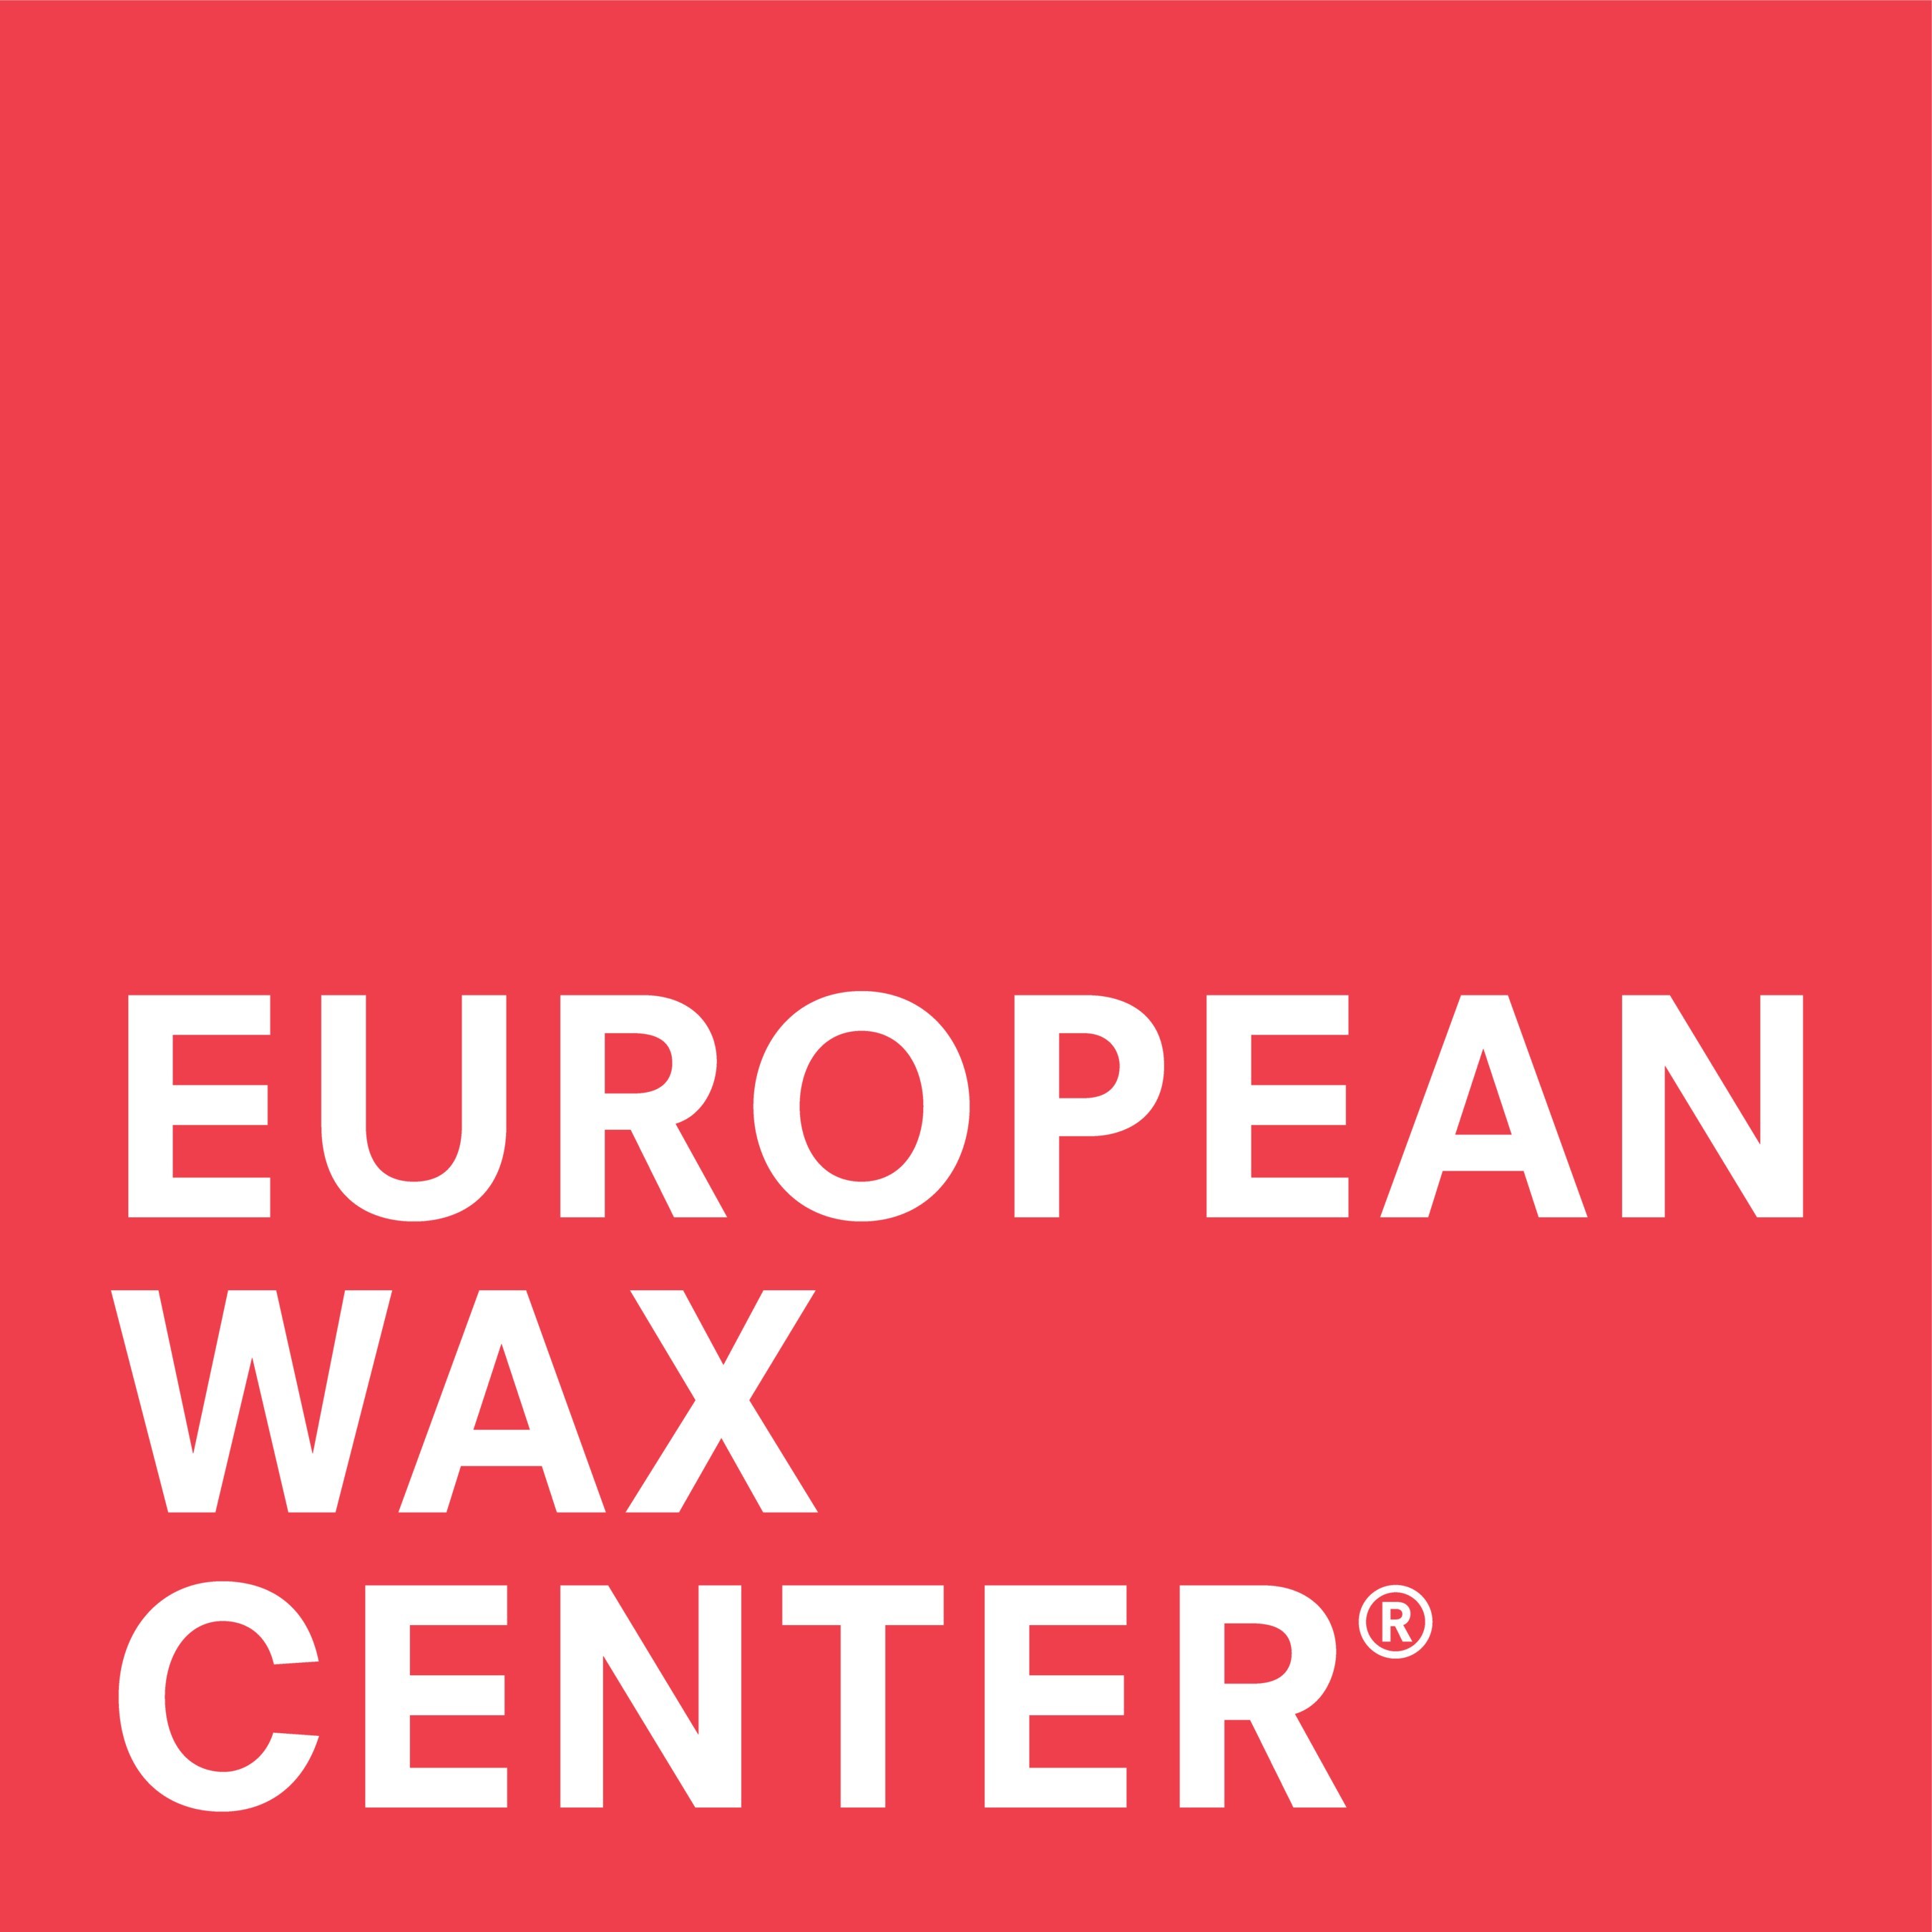 European Wax Center Named A quot Top Growth Franchise quot By Entrepreneur Magazine